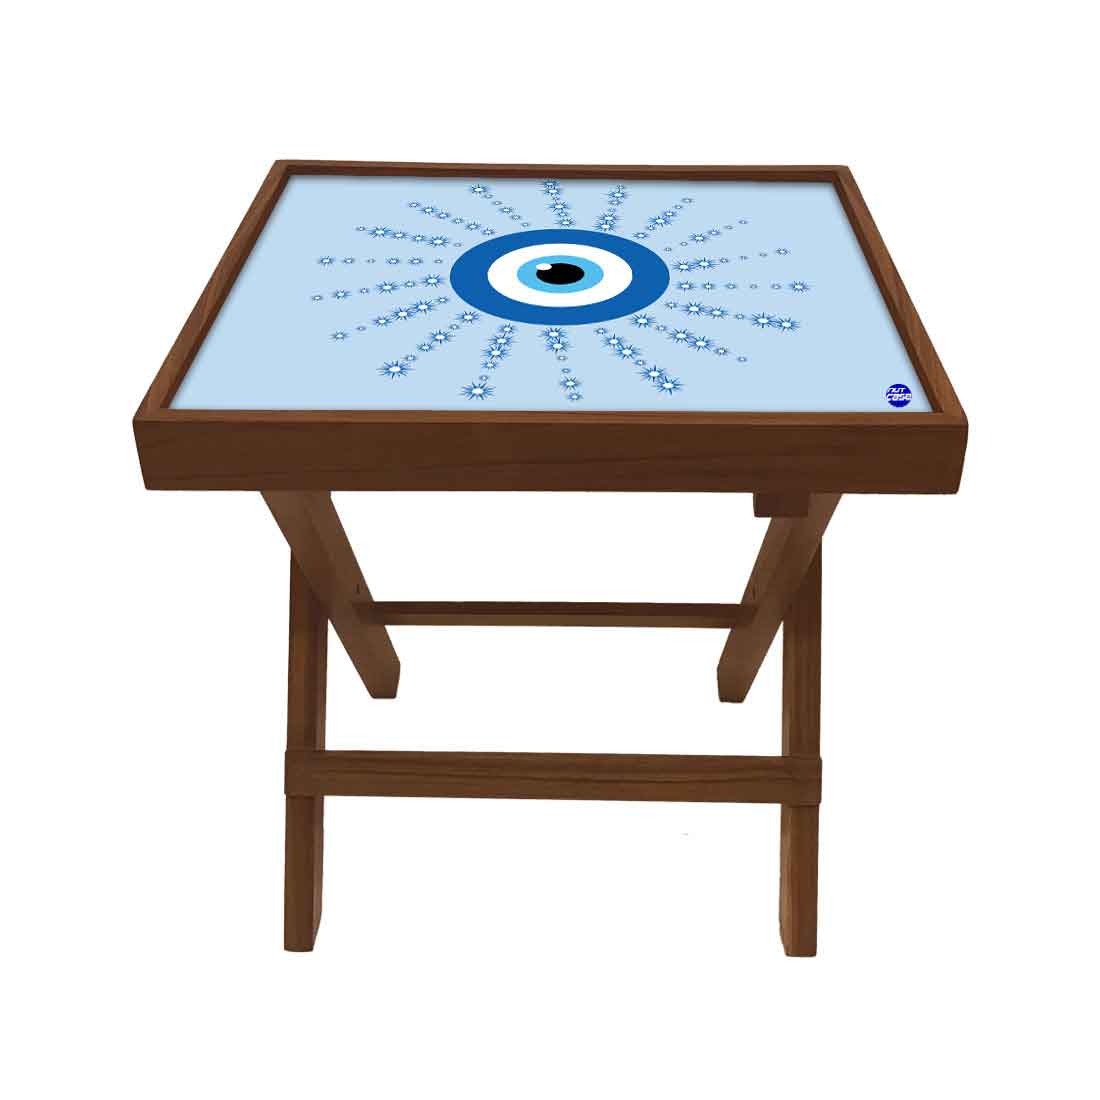 Folding Side Table for End Tables Bedroom Living Room - Evil Eye Protector Nutcase